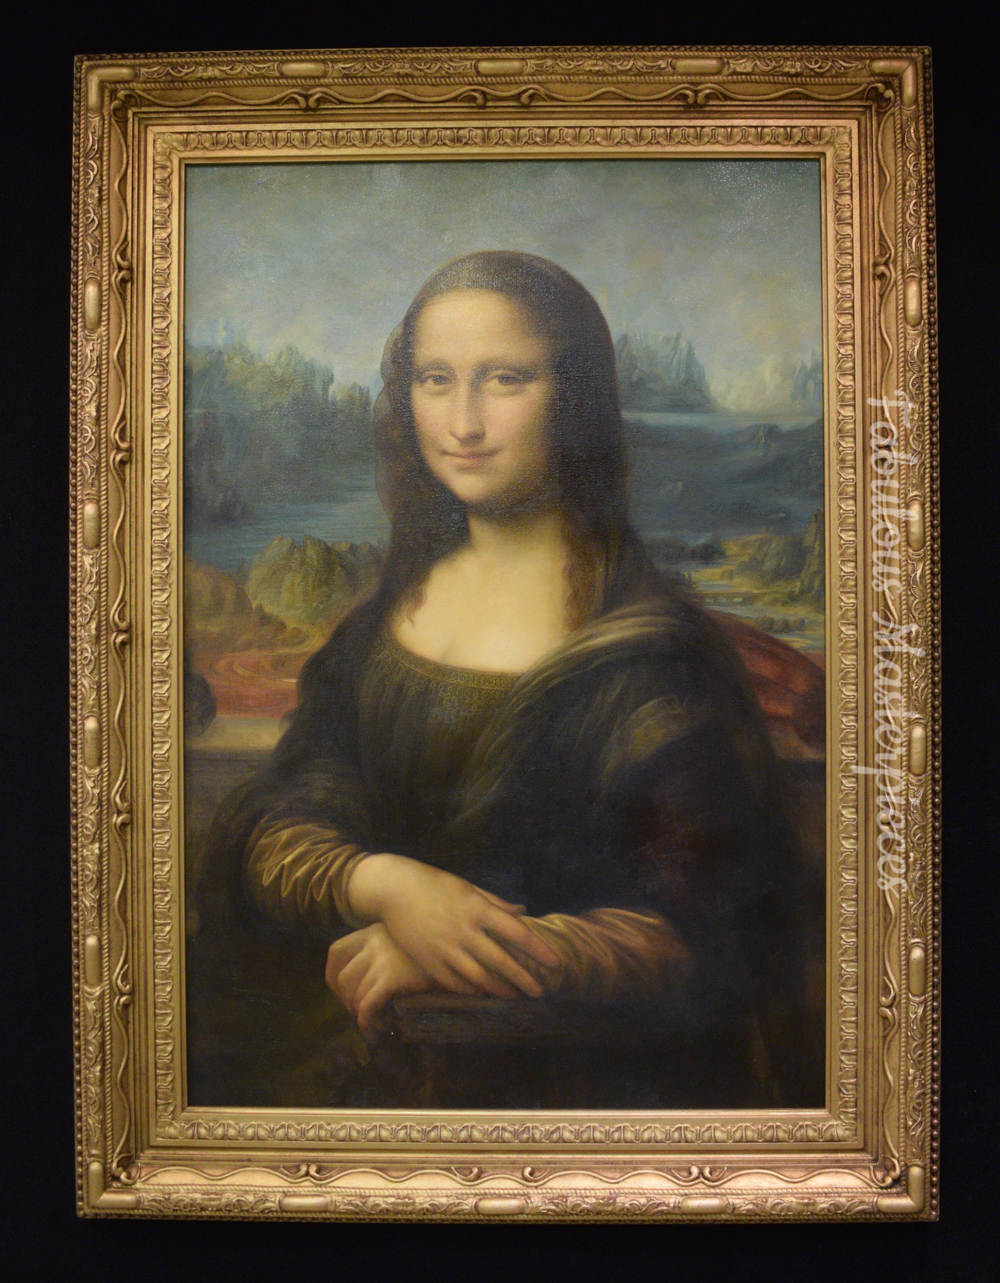 Fabulous Masterpieces' BlogThe Mona Lisa - Fabulous Masterpieces' Blog